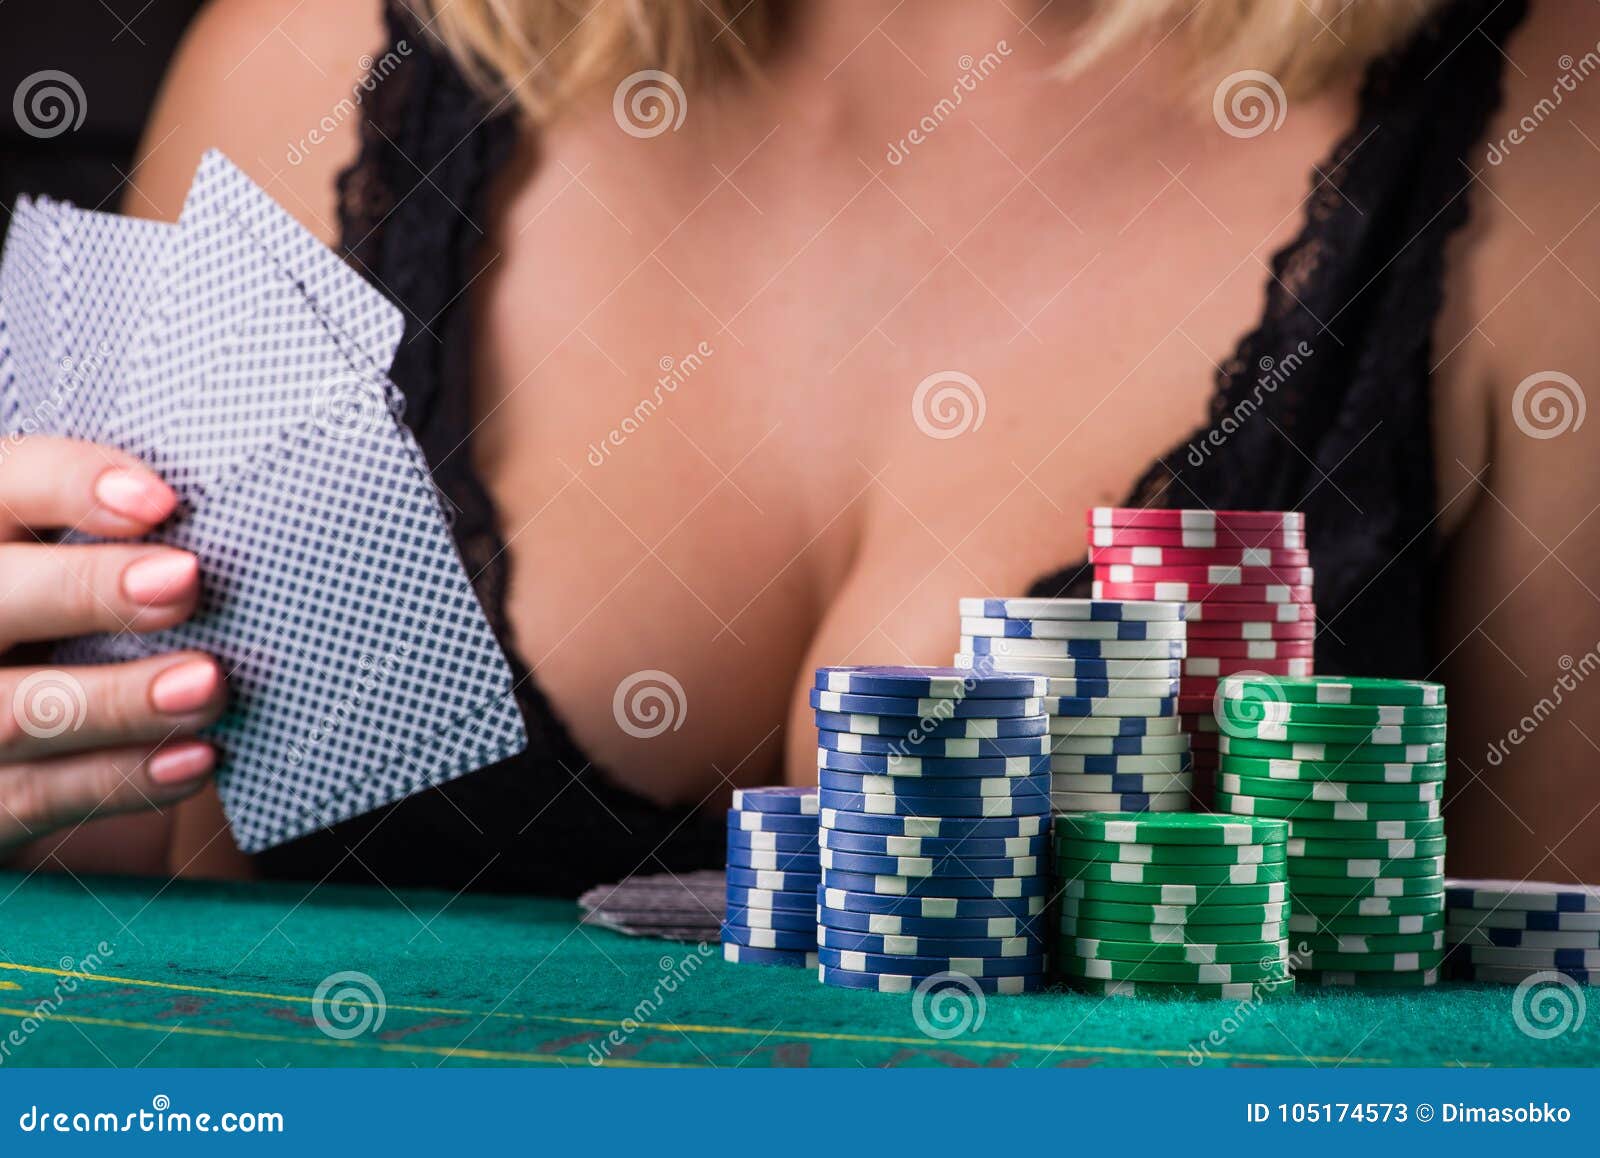 Woman playing poker game stock image. Image of makeup - 105174573